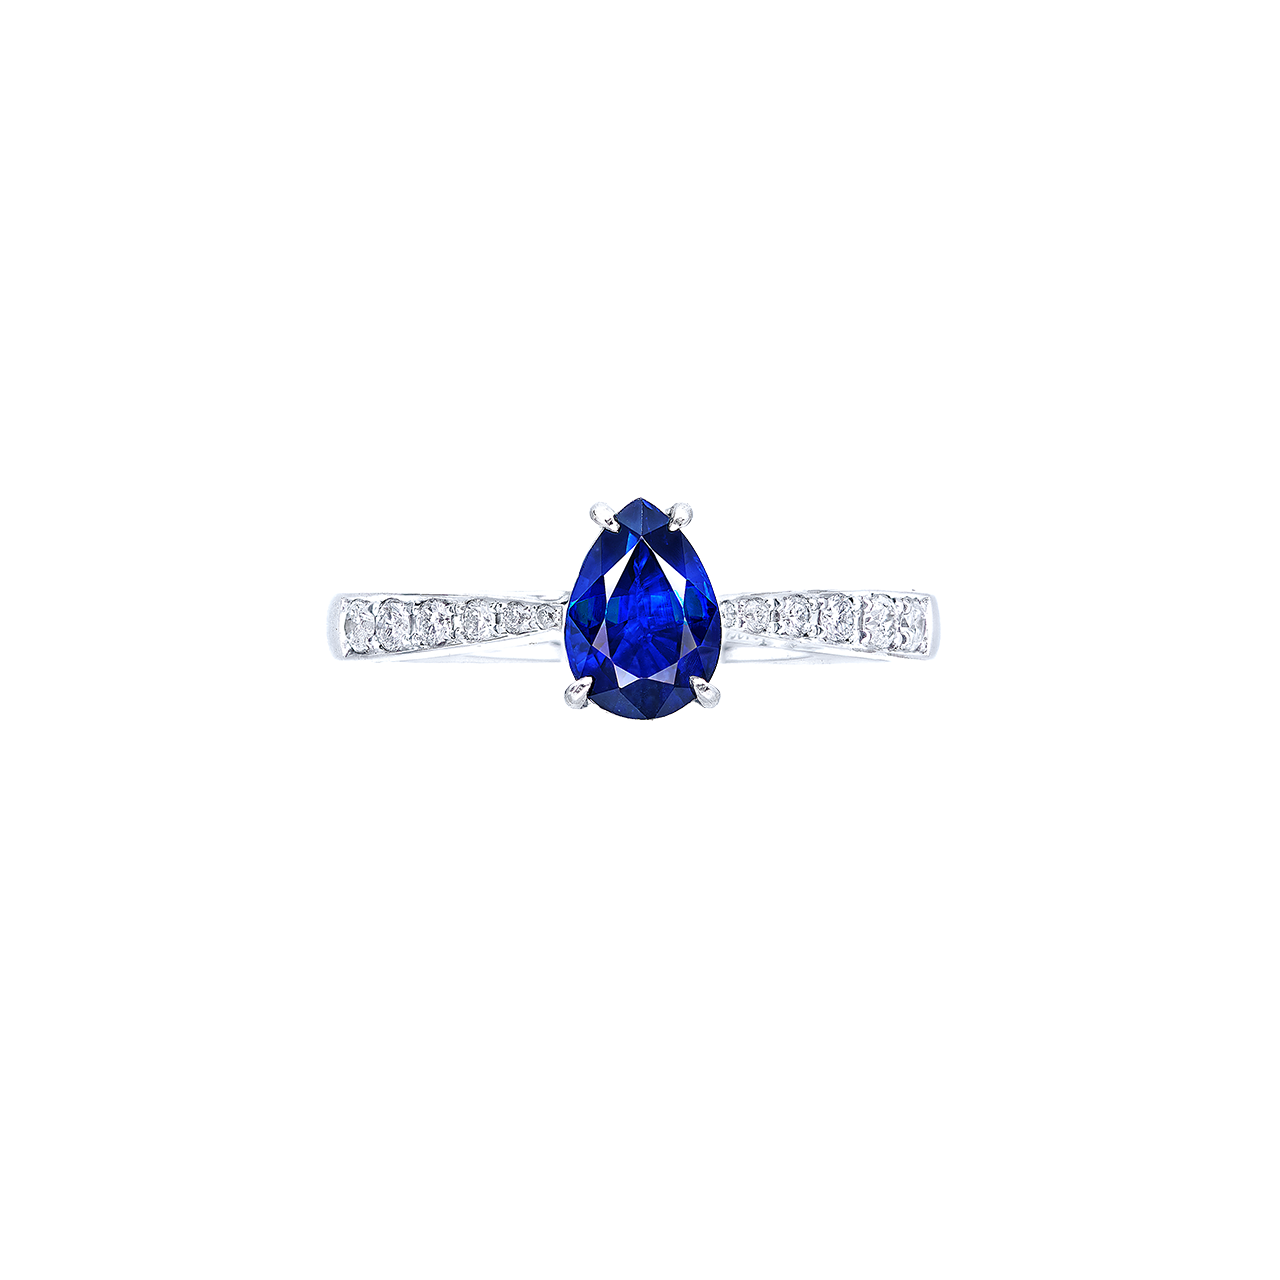 0.97克拉 藍寶石鑽戒
Blue Sapphire and 
Diamond Ring